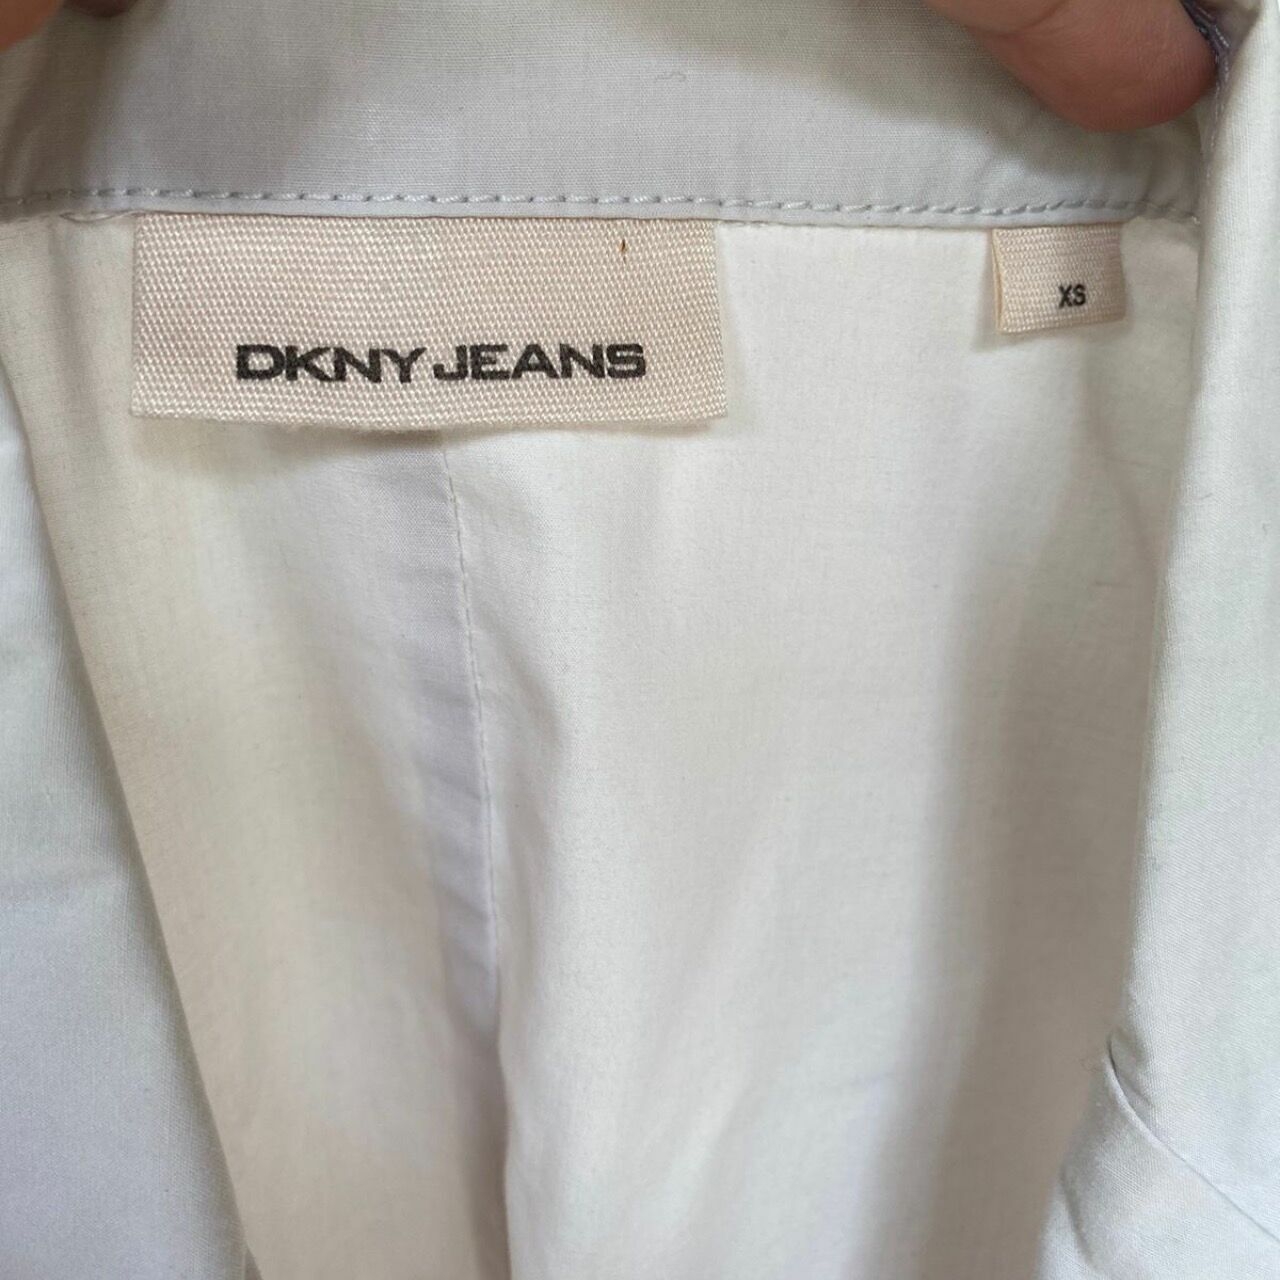 Dkny Jeans Cream Blazer